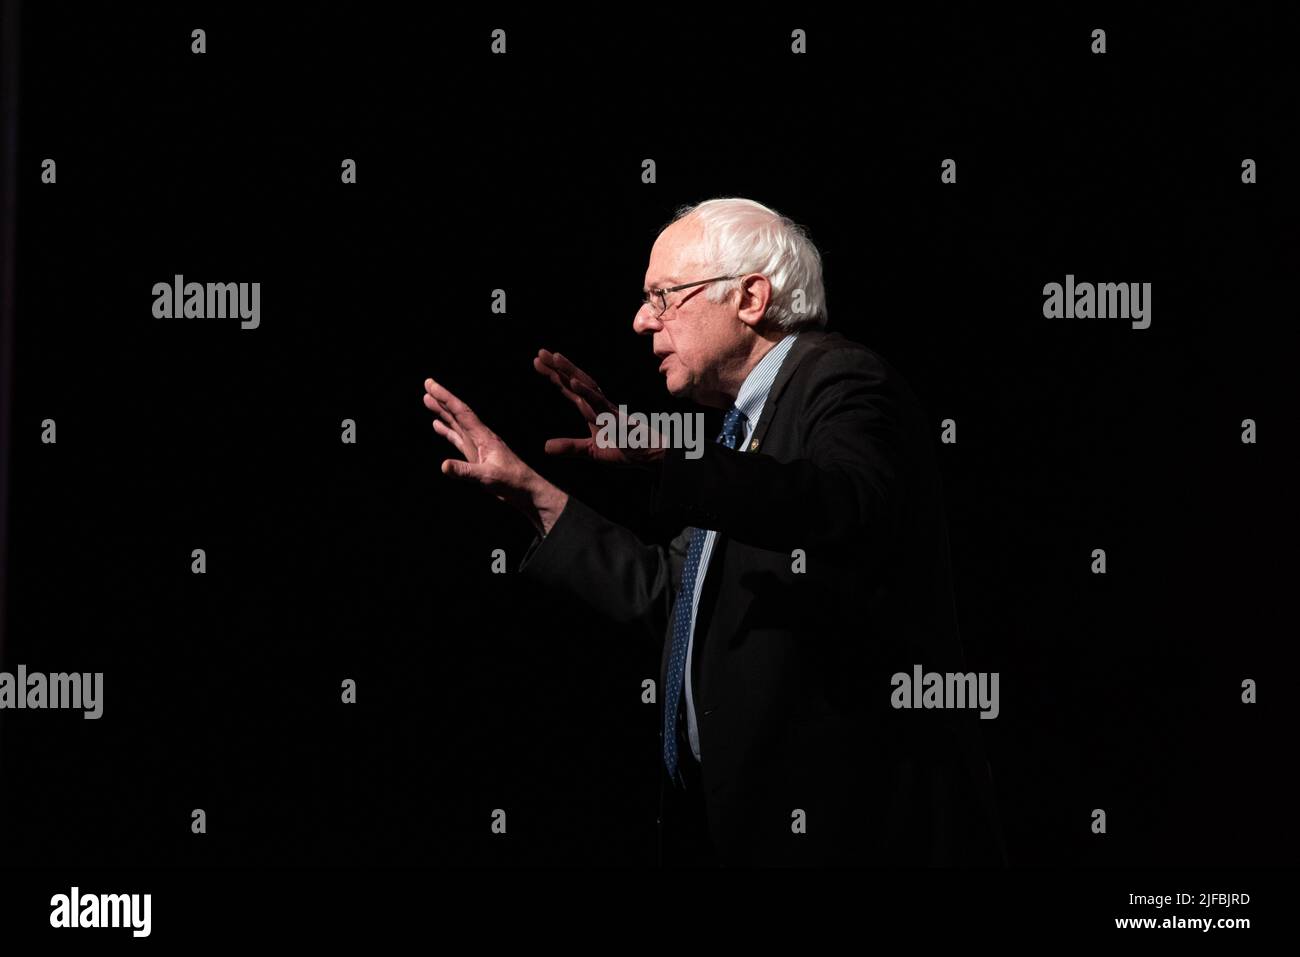 UK. Bernie Sanders Giving a Talk. Credit: SJ/Alamy Stock Photo